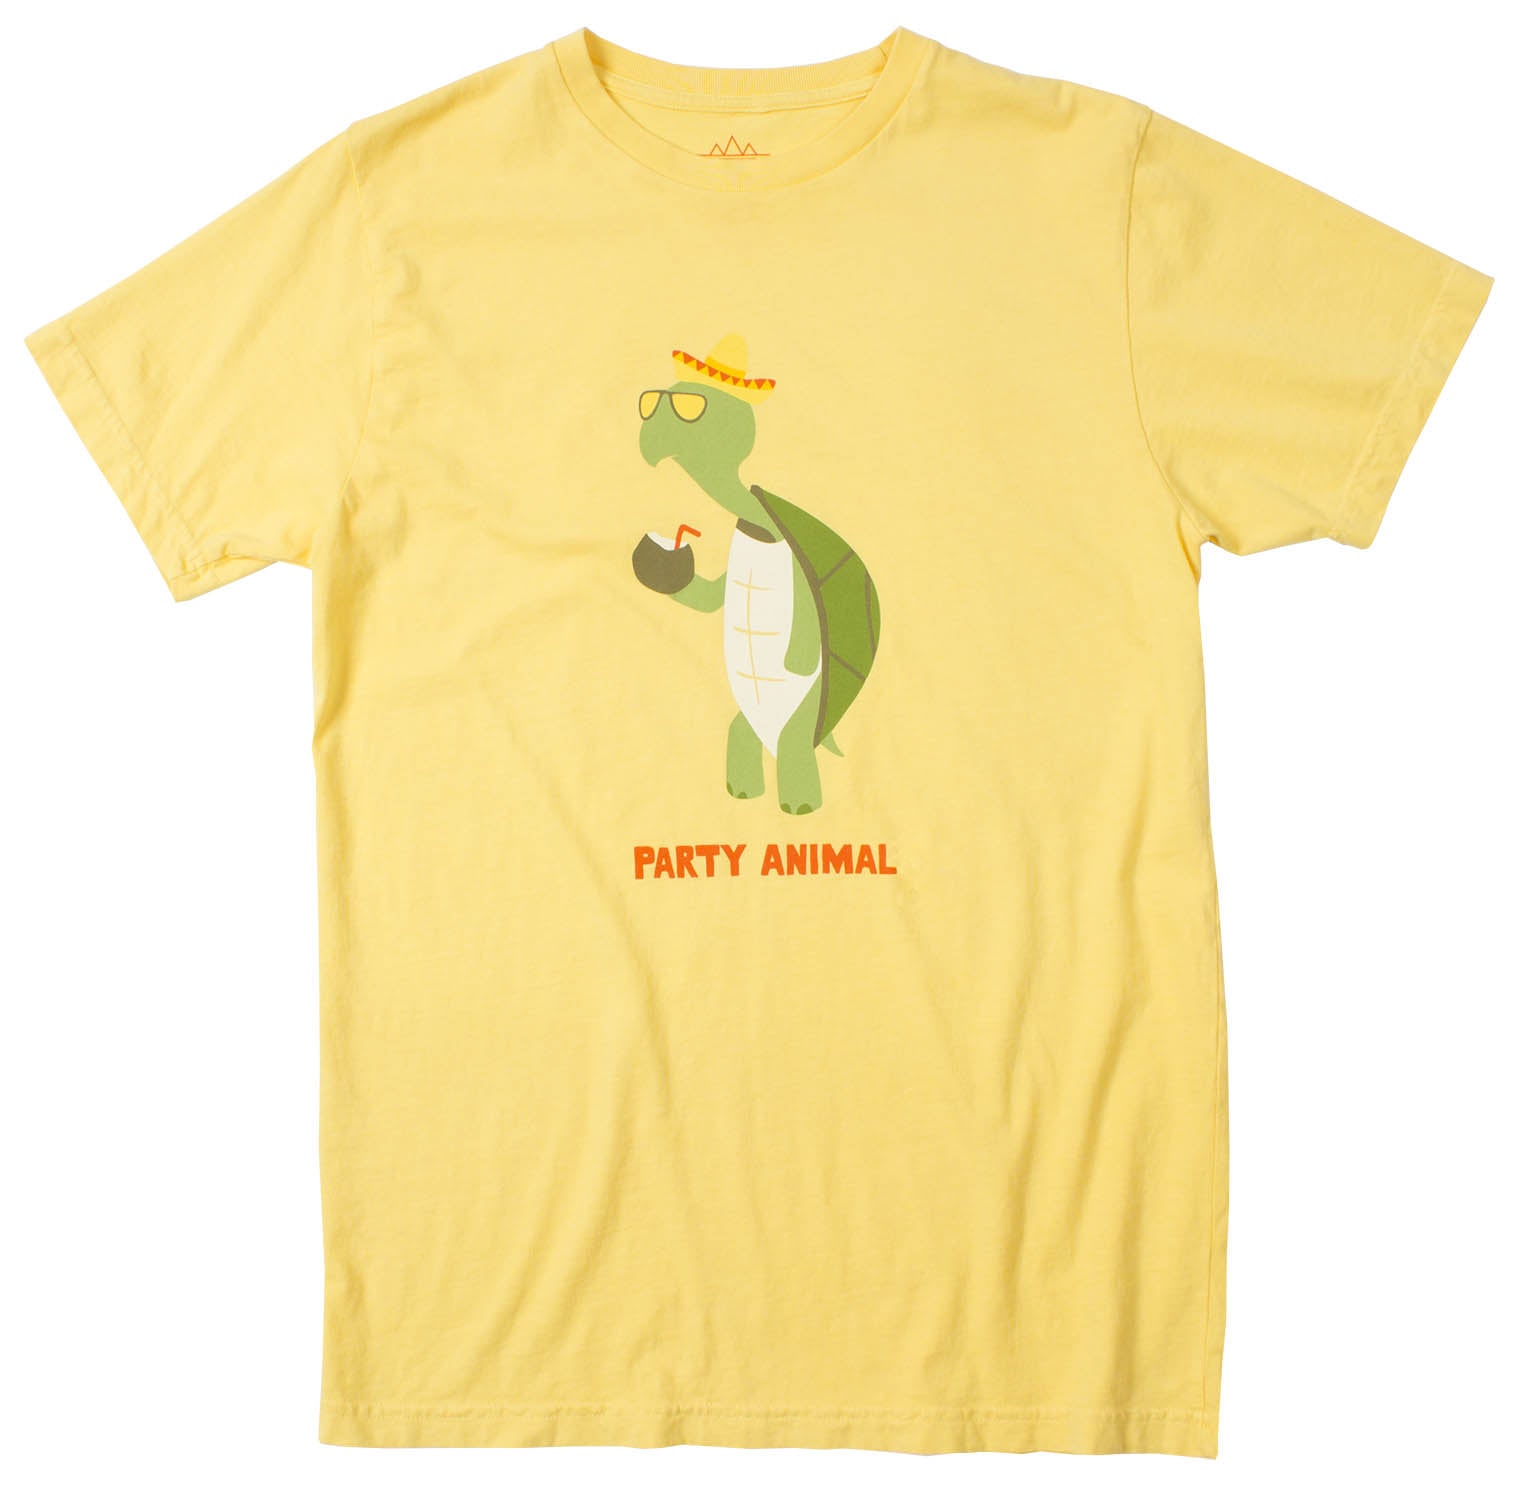 Party Animal Turtle Men's Lemon Graphic Tee by Altru Apparel